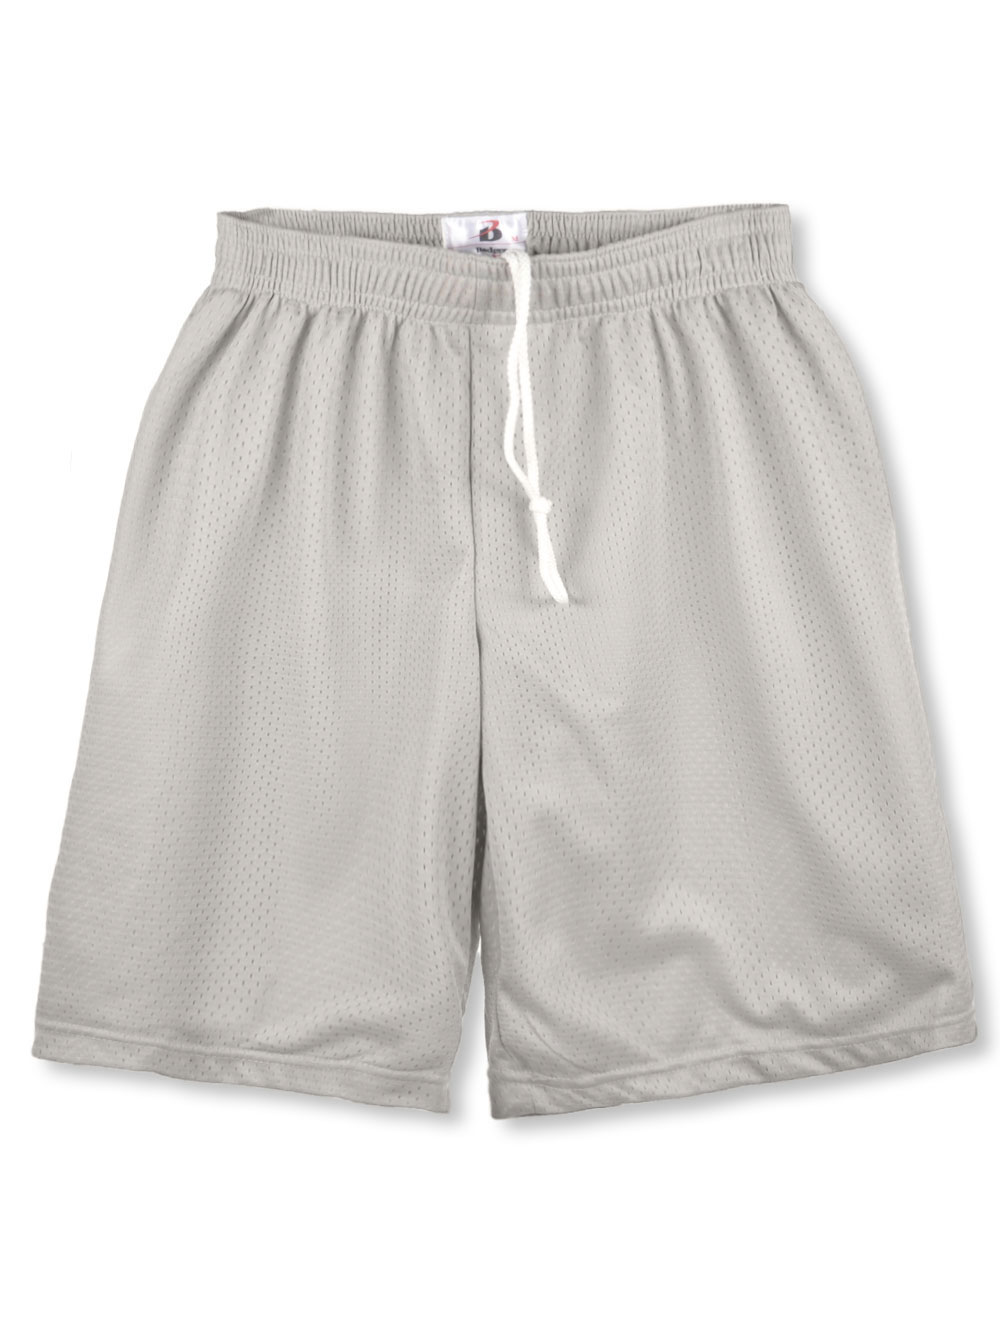 Badger Mesh Athletic Shorts (Adult Sizes S - XXL)